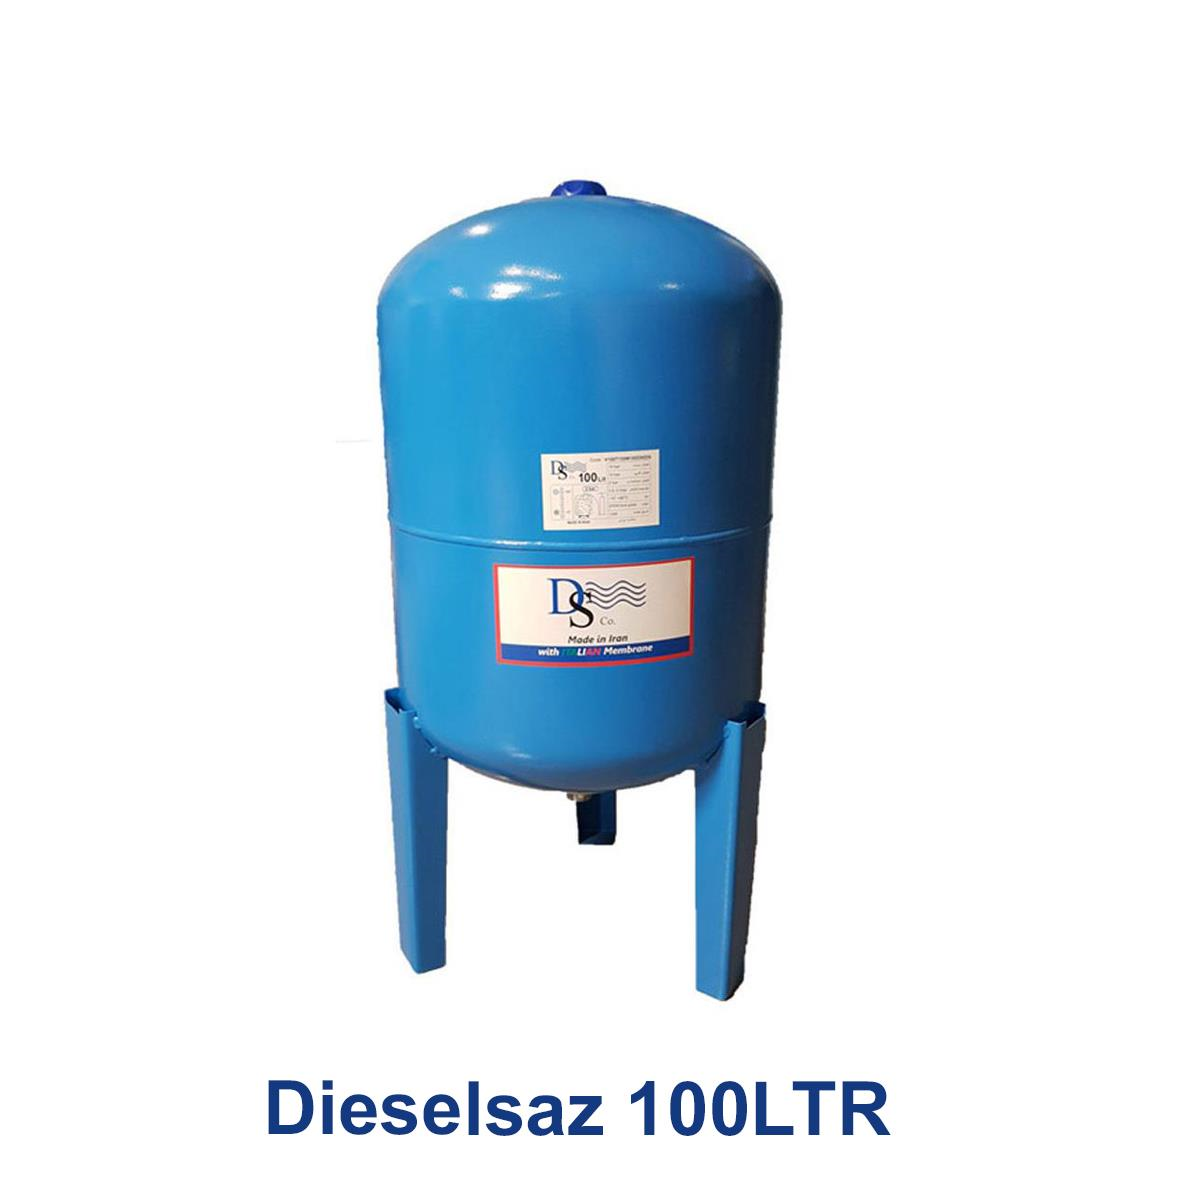 Dieselsaz-100LTR